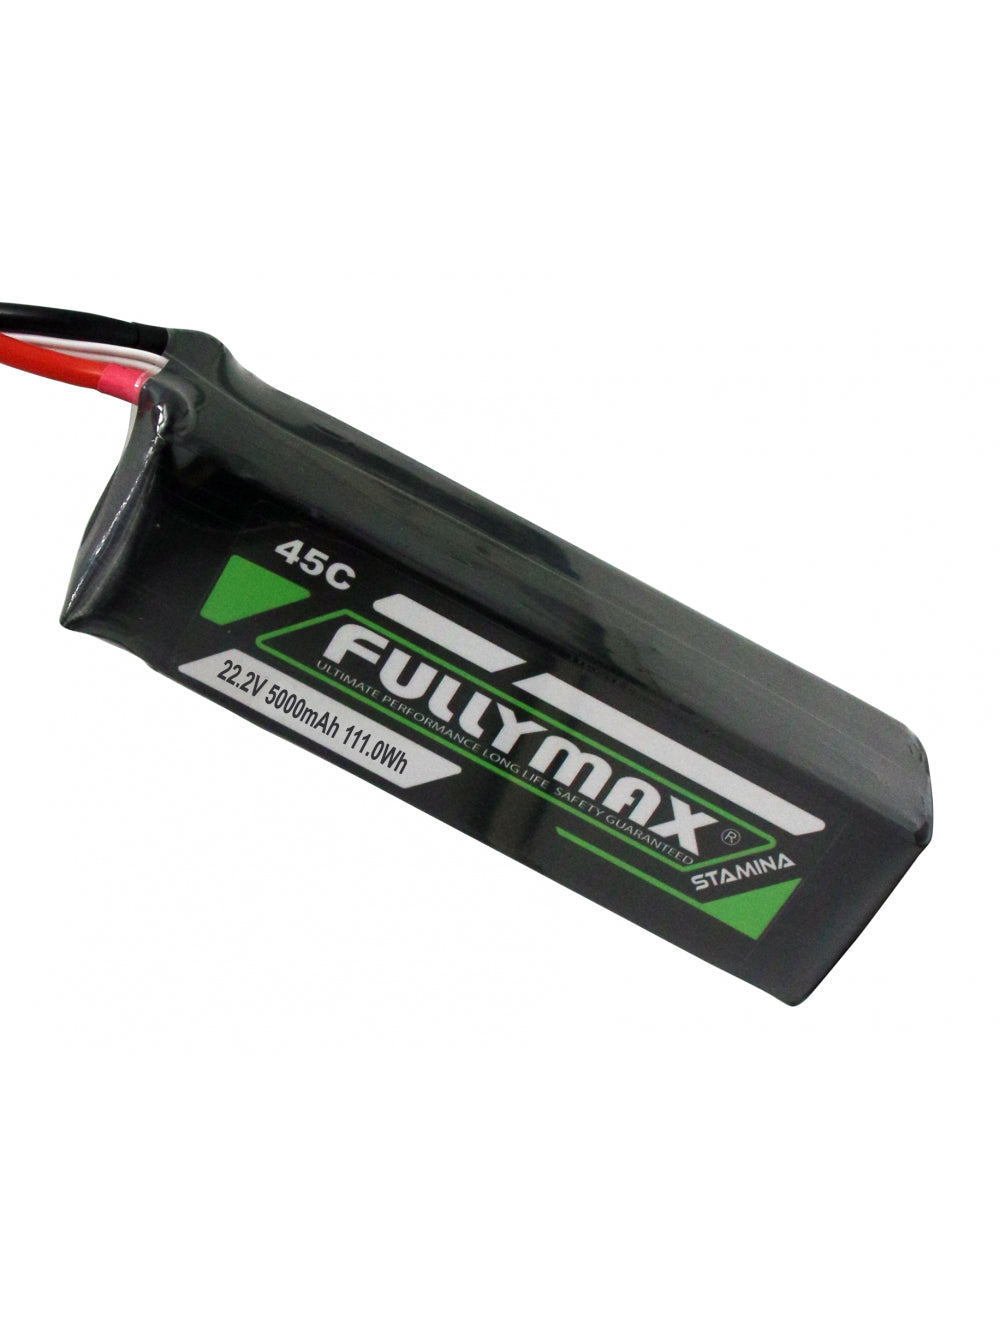 Overlander Fullymax 5000mAh 22.2V 6S 45C LiPo Battery - Deans Connector 3448